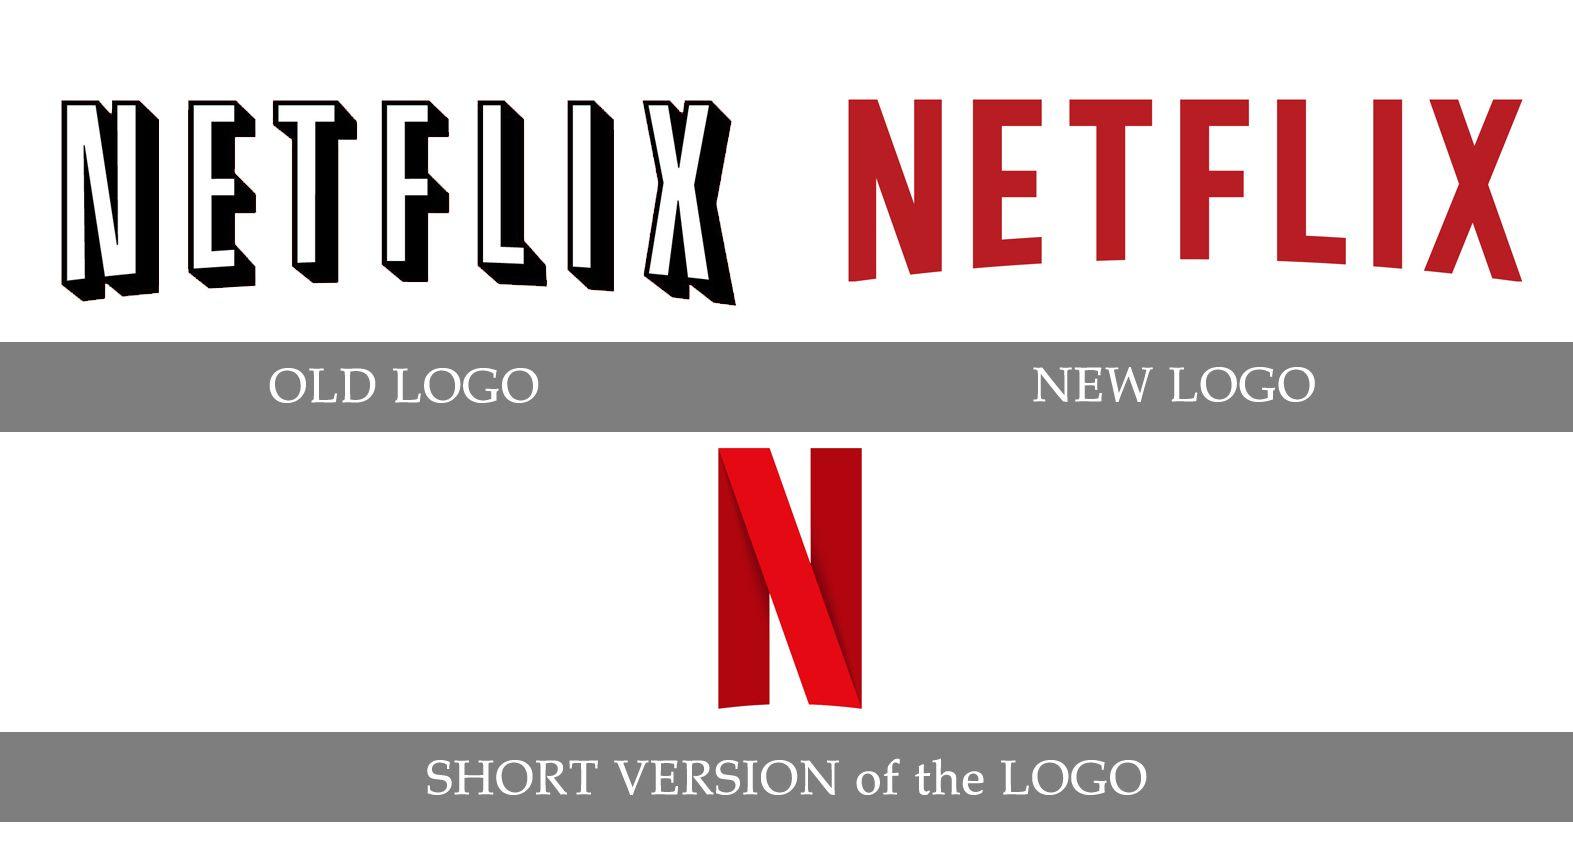 Netflix Company Logo - Netflix Logo, Netflix Symbol, Meaning, History and Evolution